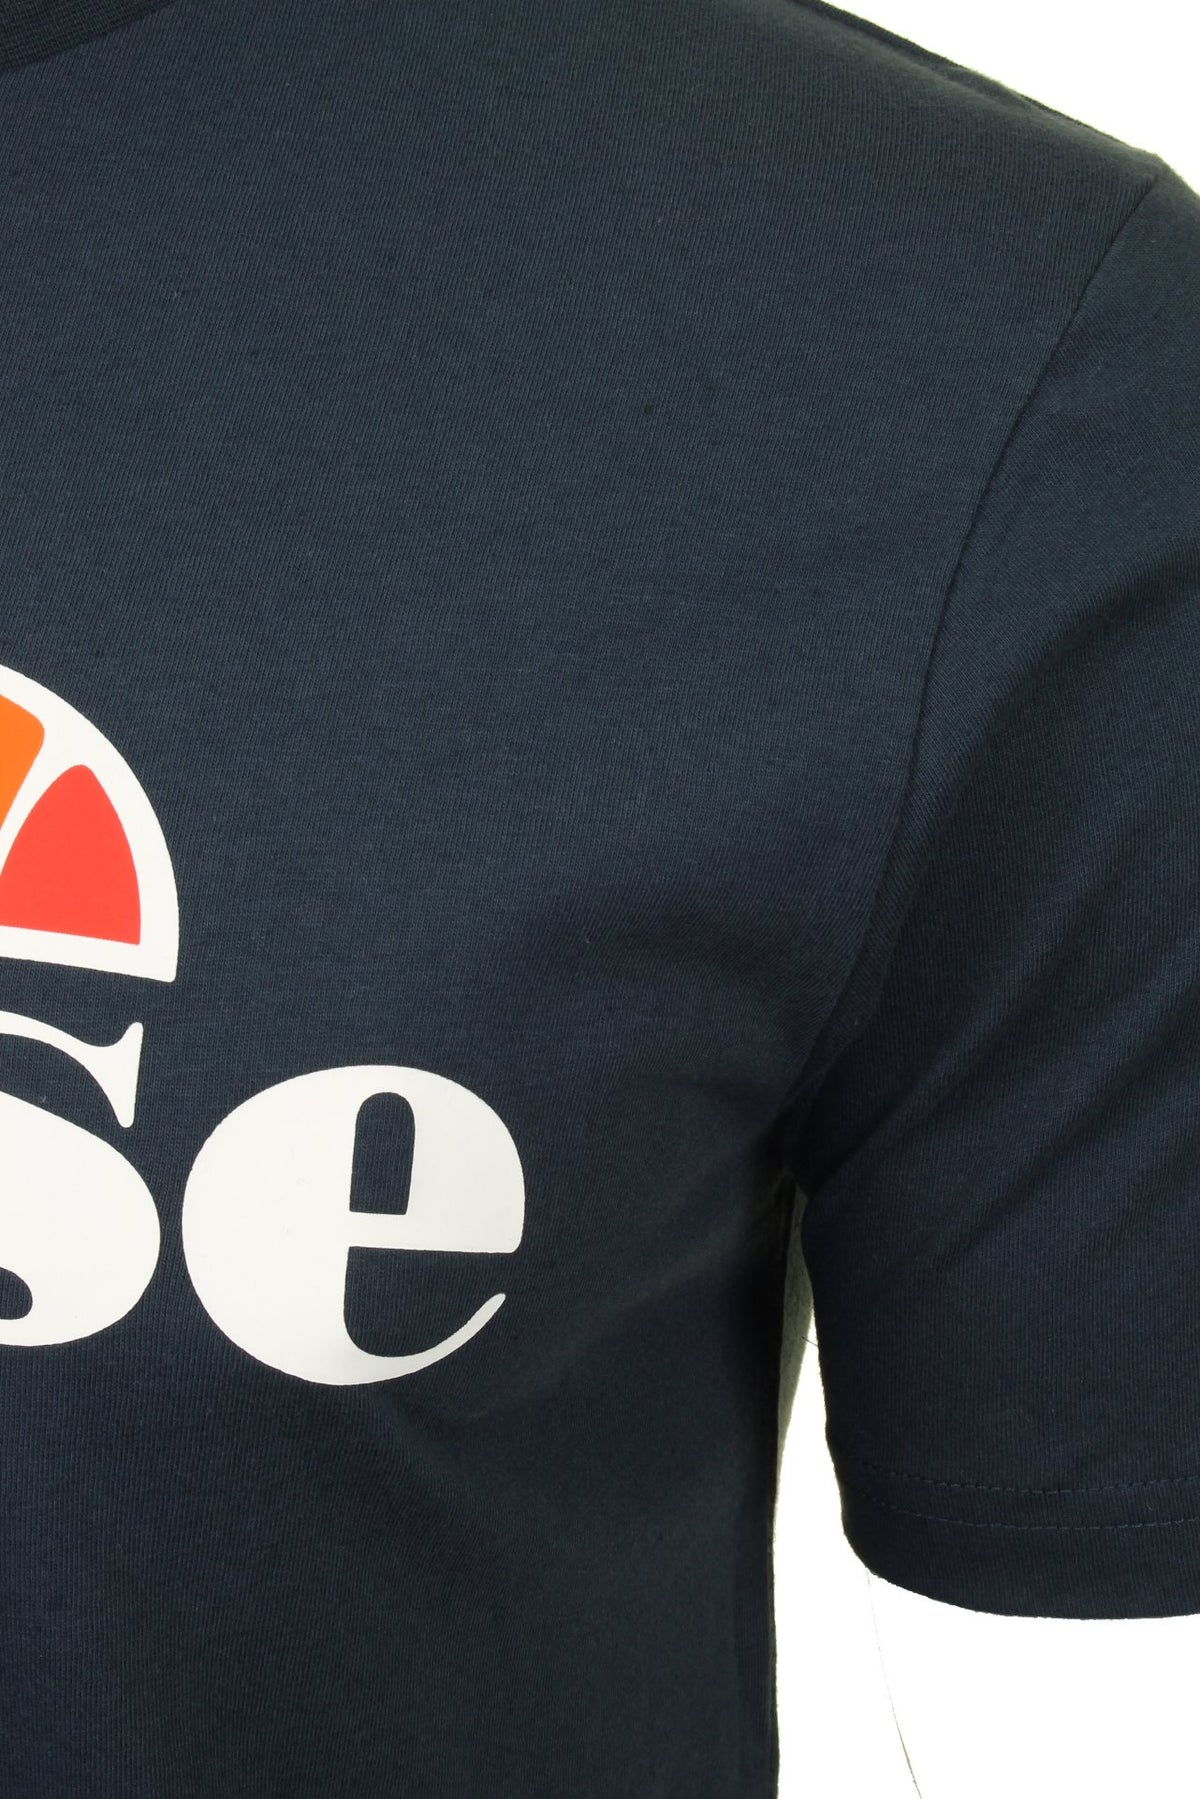 Ellesse Mens Logo Front Crew Neck T-Shirt 'PRADO' - Short Sleeved, 02, Shc07405, Navy